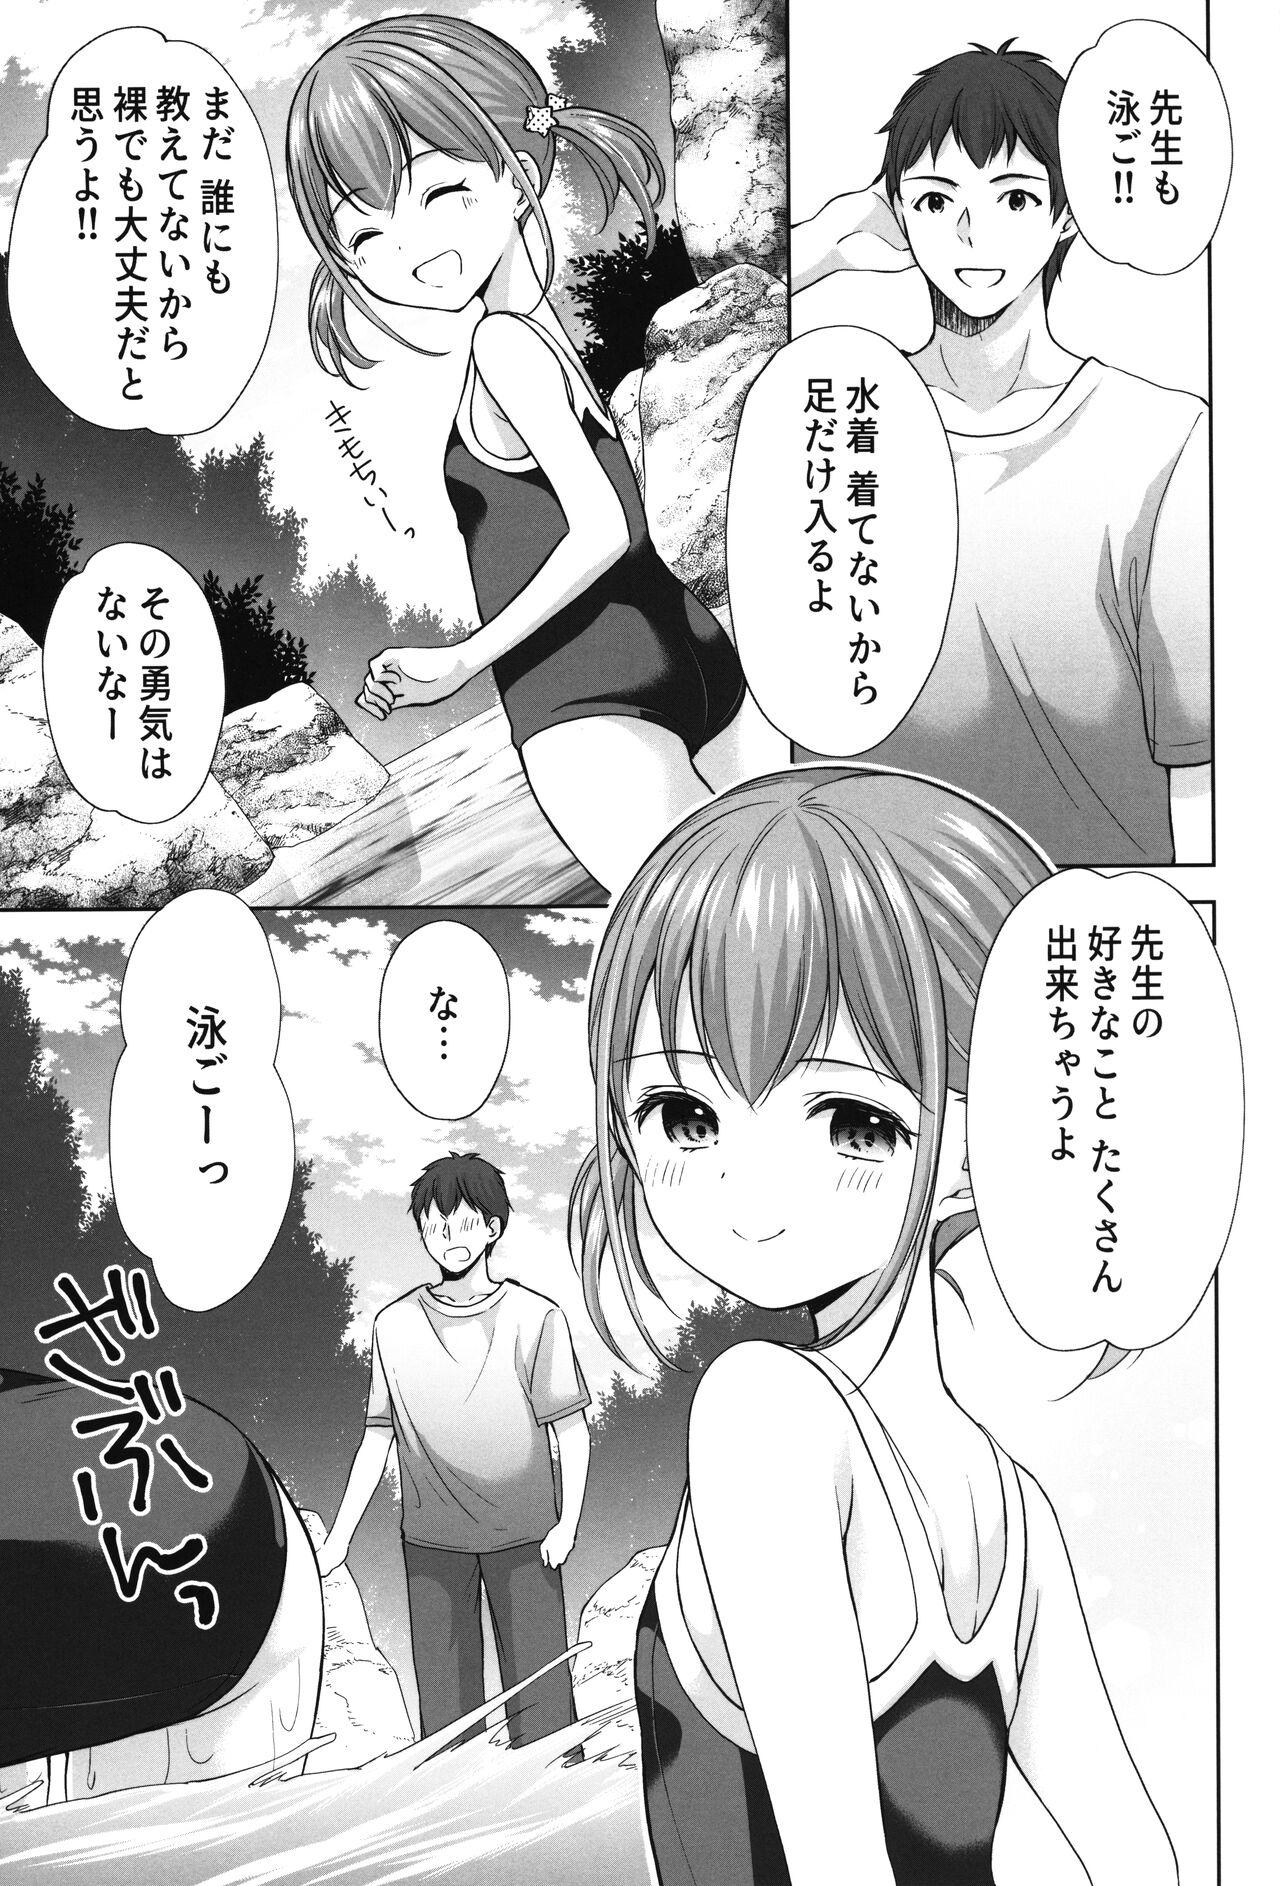 Stripping Ayamachi wa Himegoto no Hajimari 6 - Original Periscope - Page 6